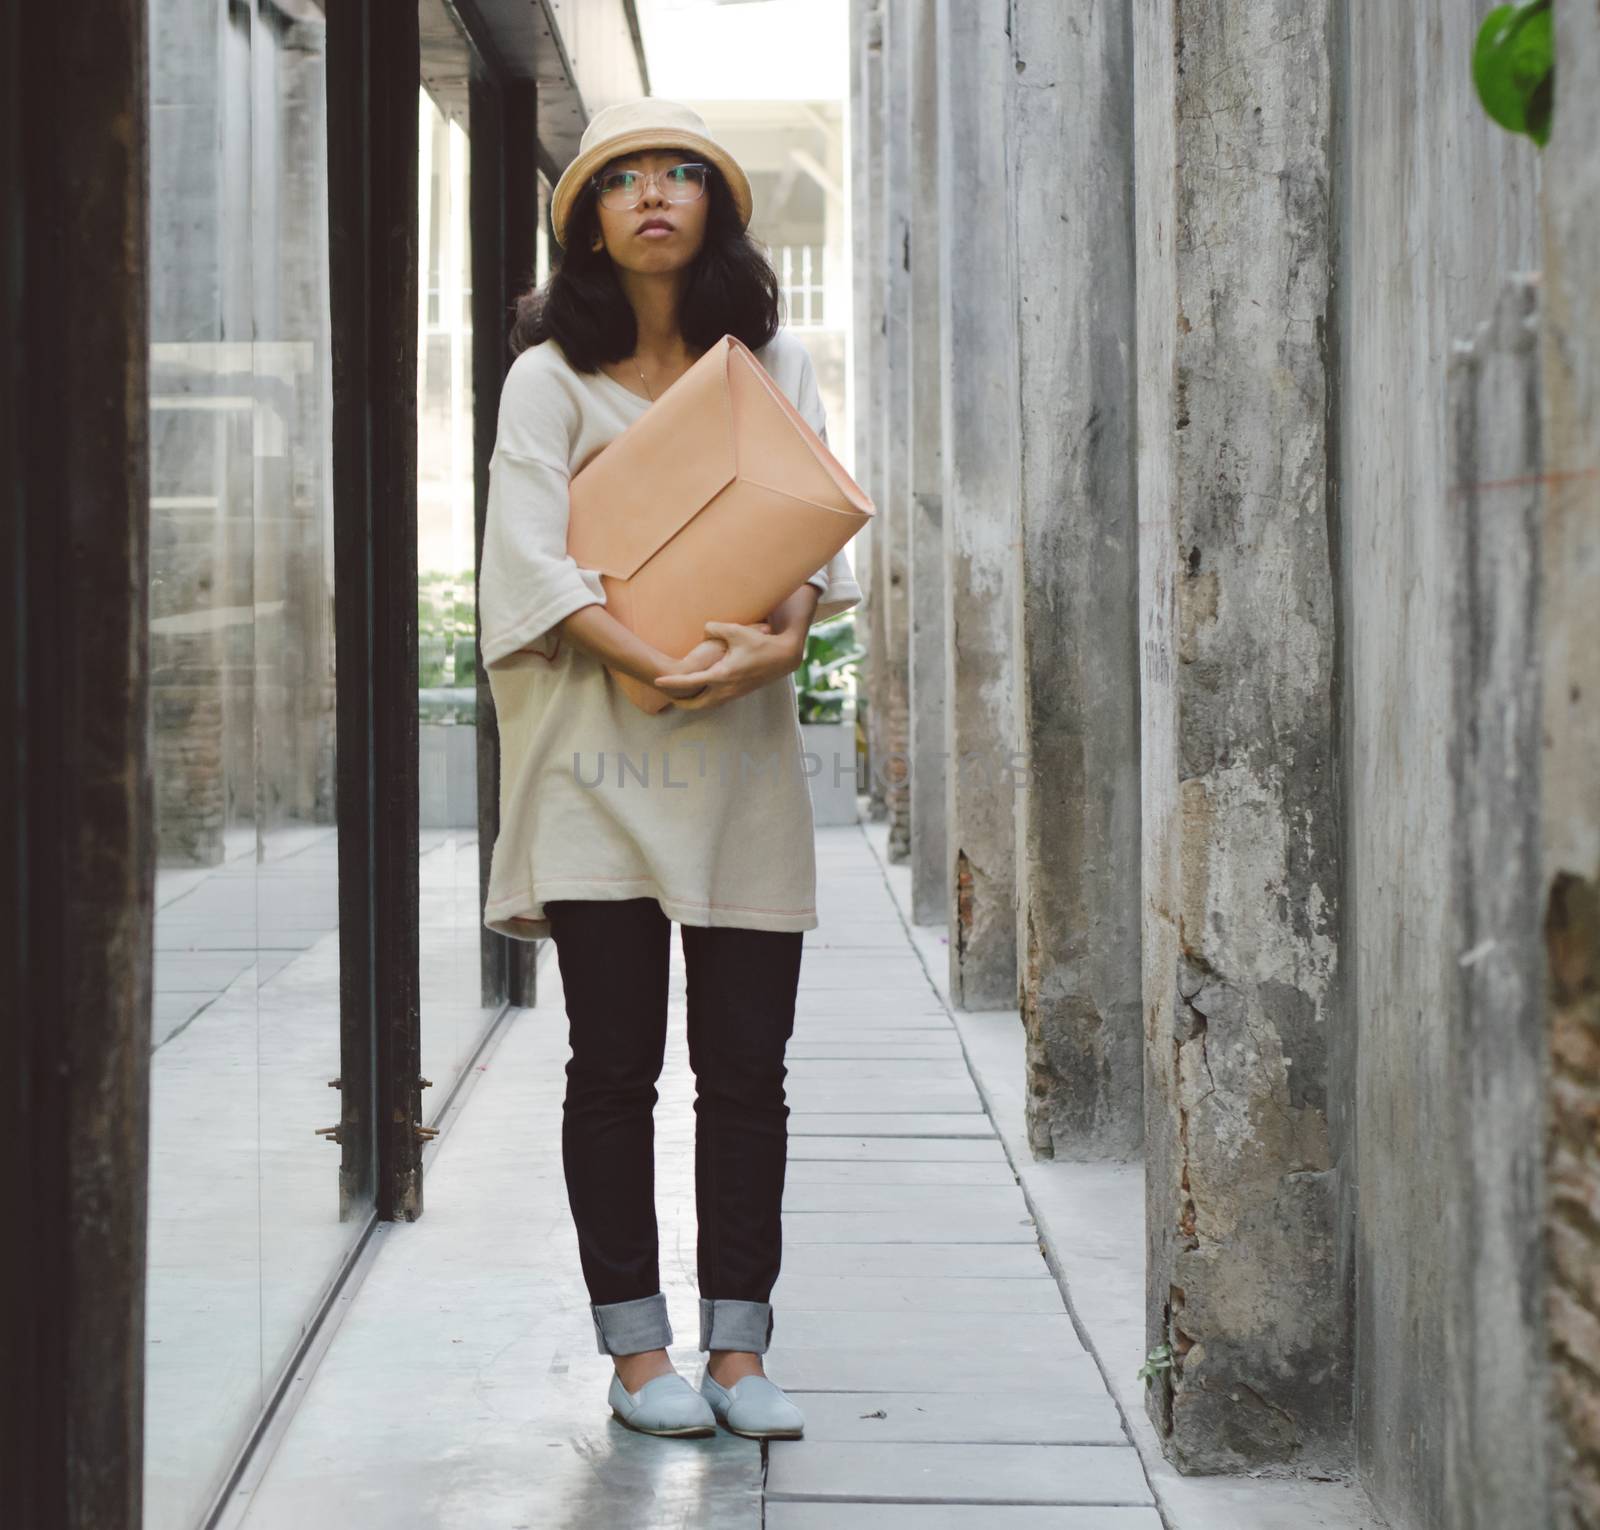 Young fashion girl with handbag at alleyway, retro filter